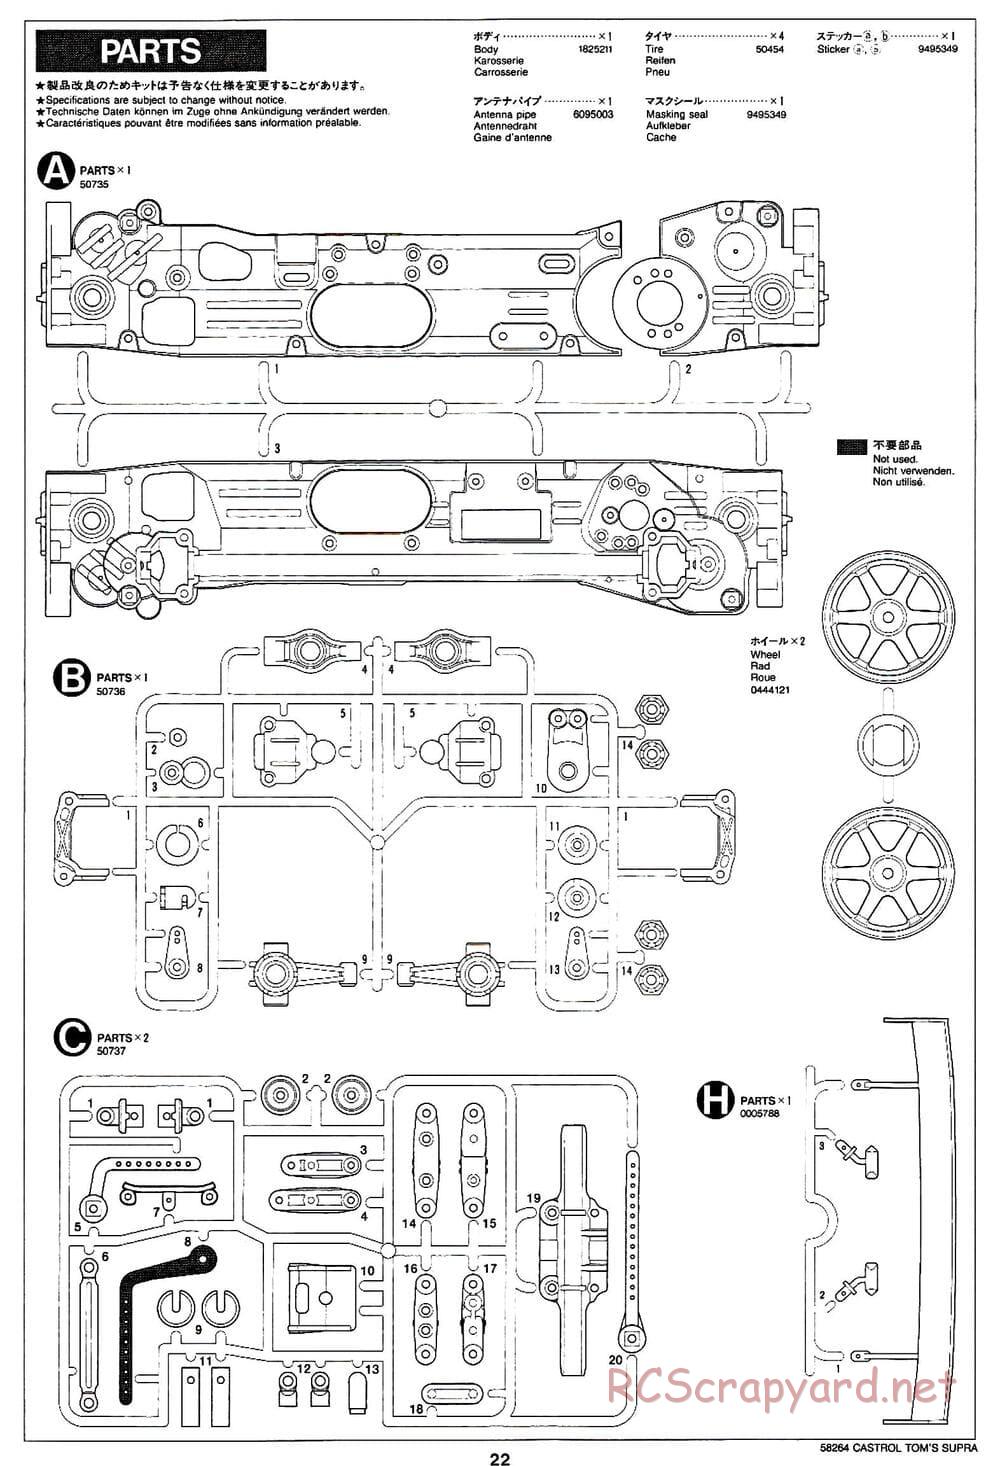 Tamiya - Castrol Tom's Supra 2000 - TL-01 Chassis - Manual - Page 22